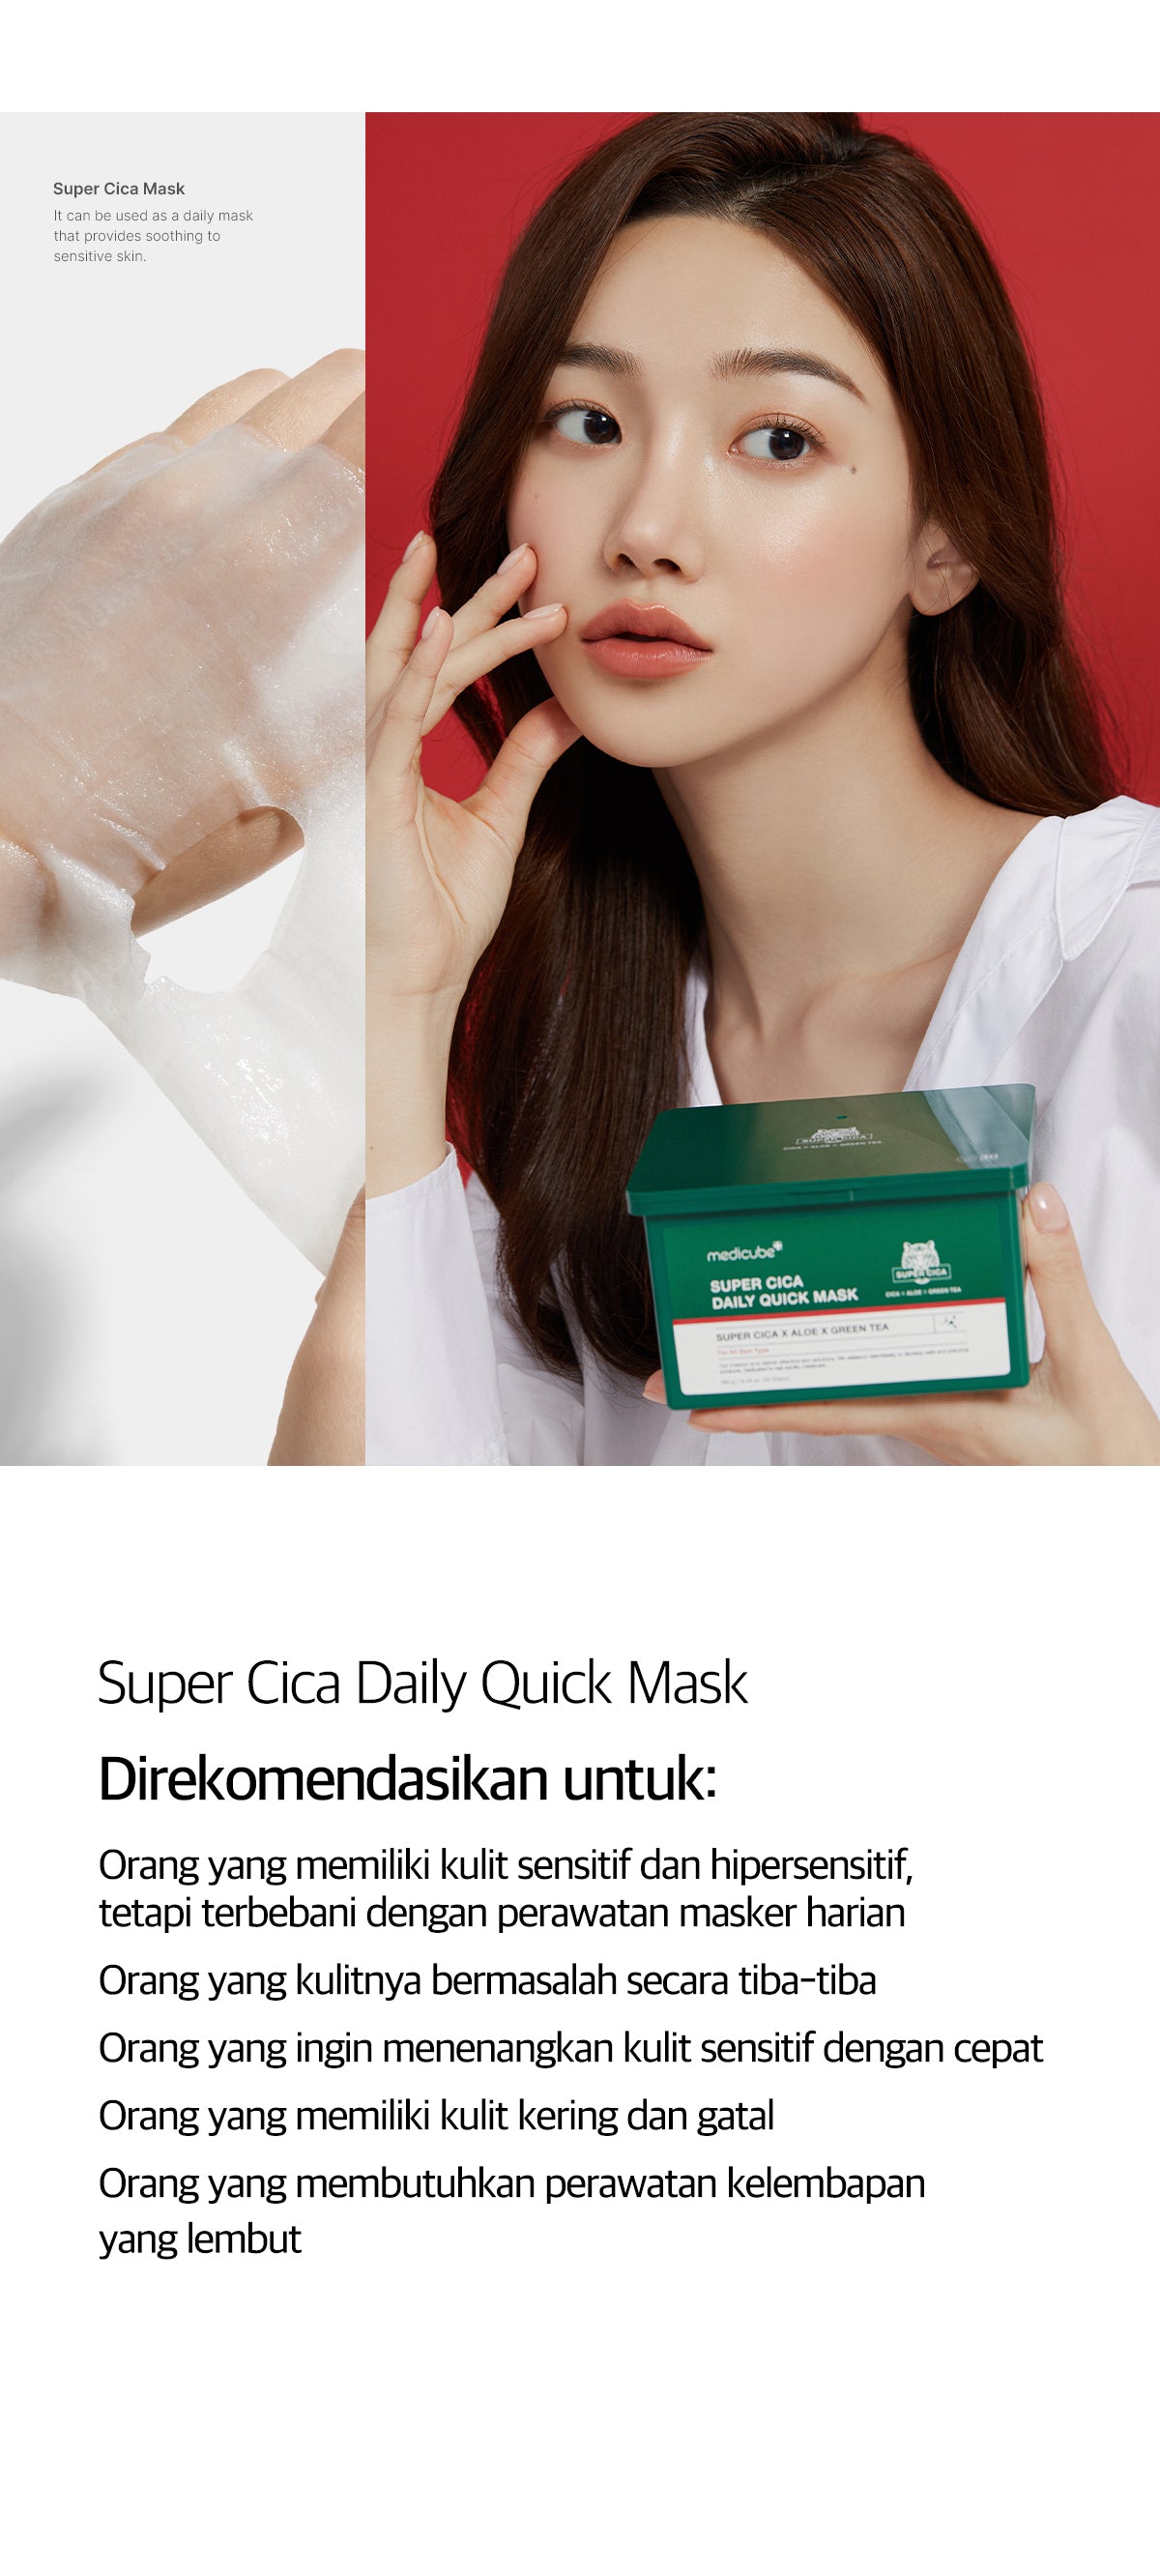 MEDICUBE Super Cica Daily Quick Mask (350gr)